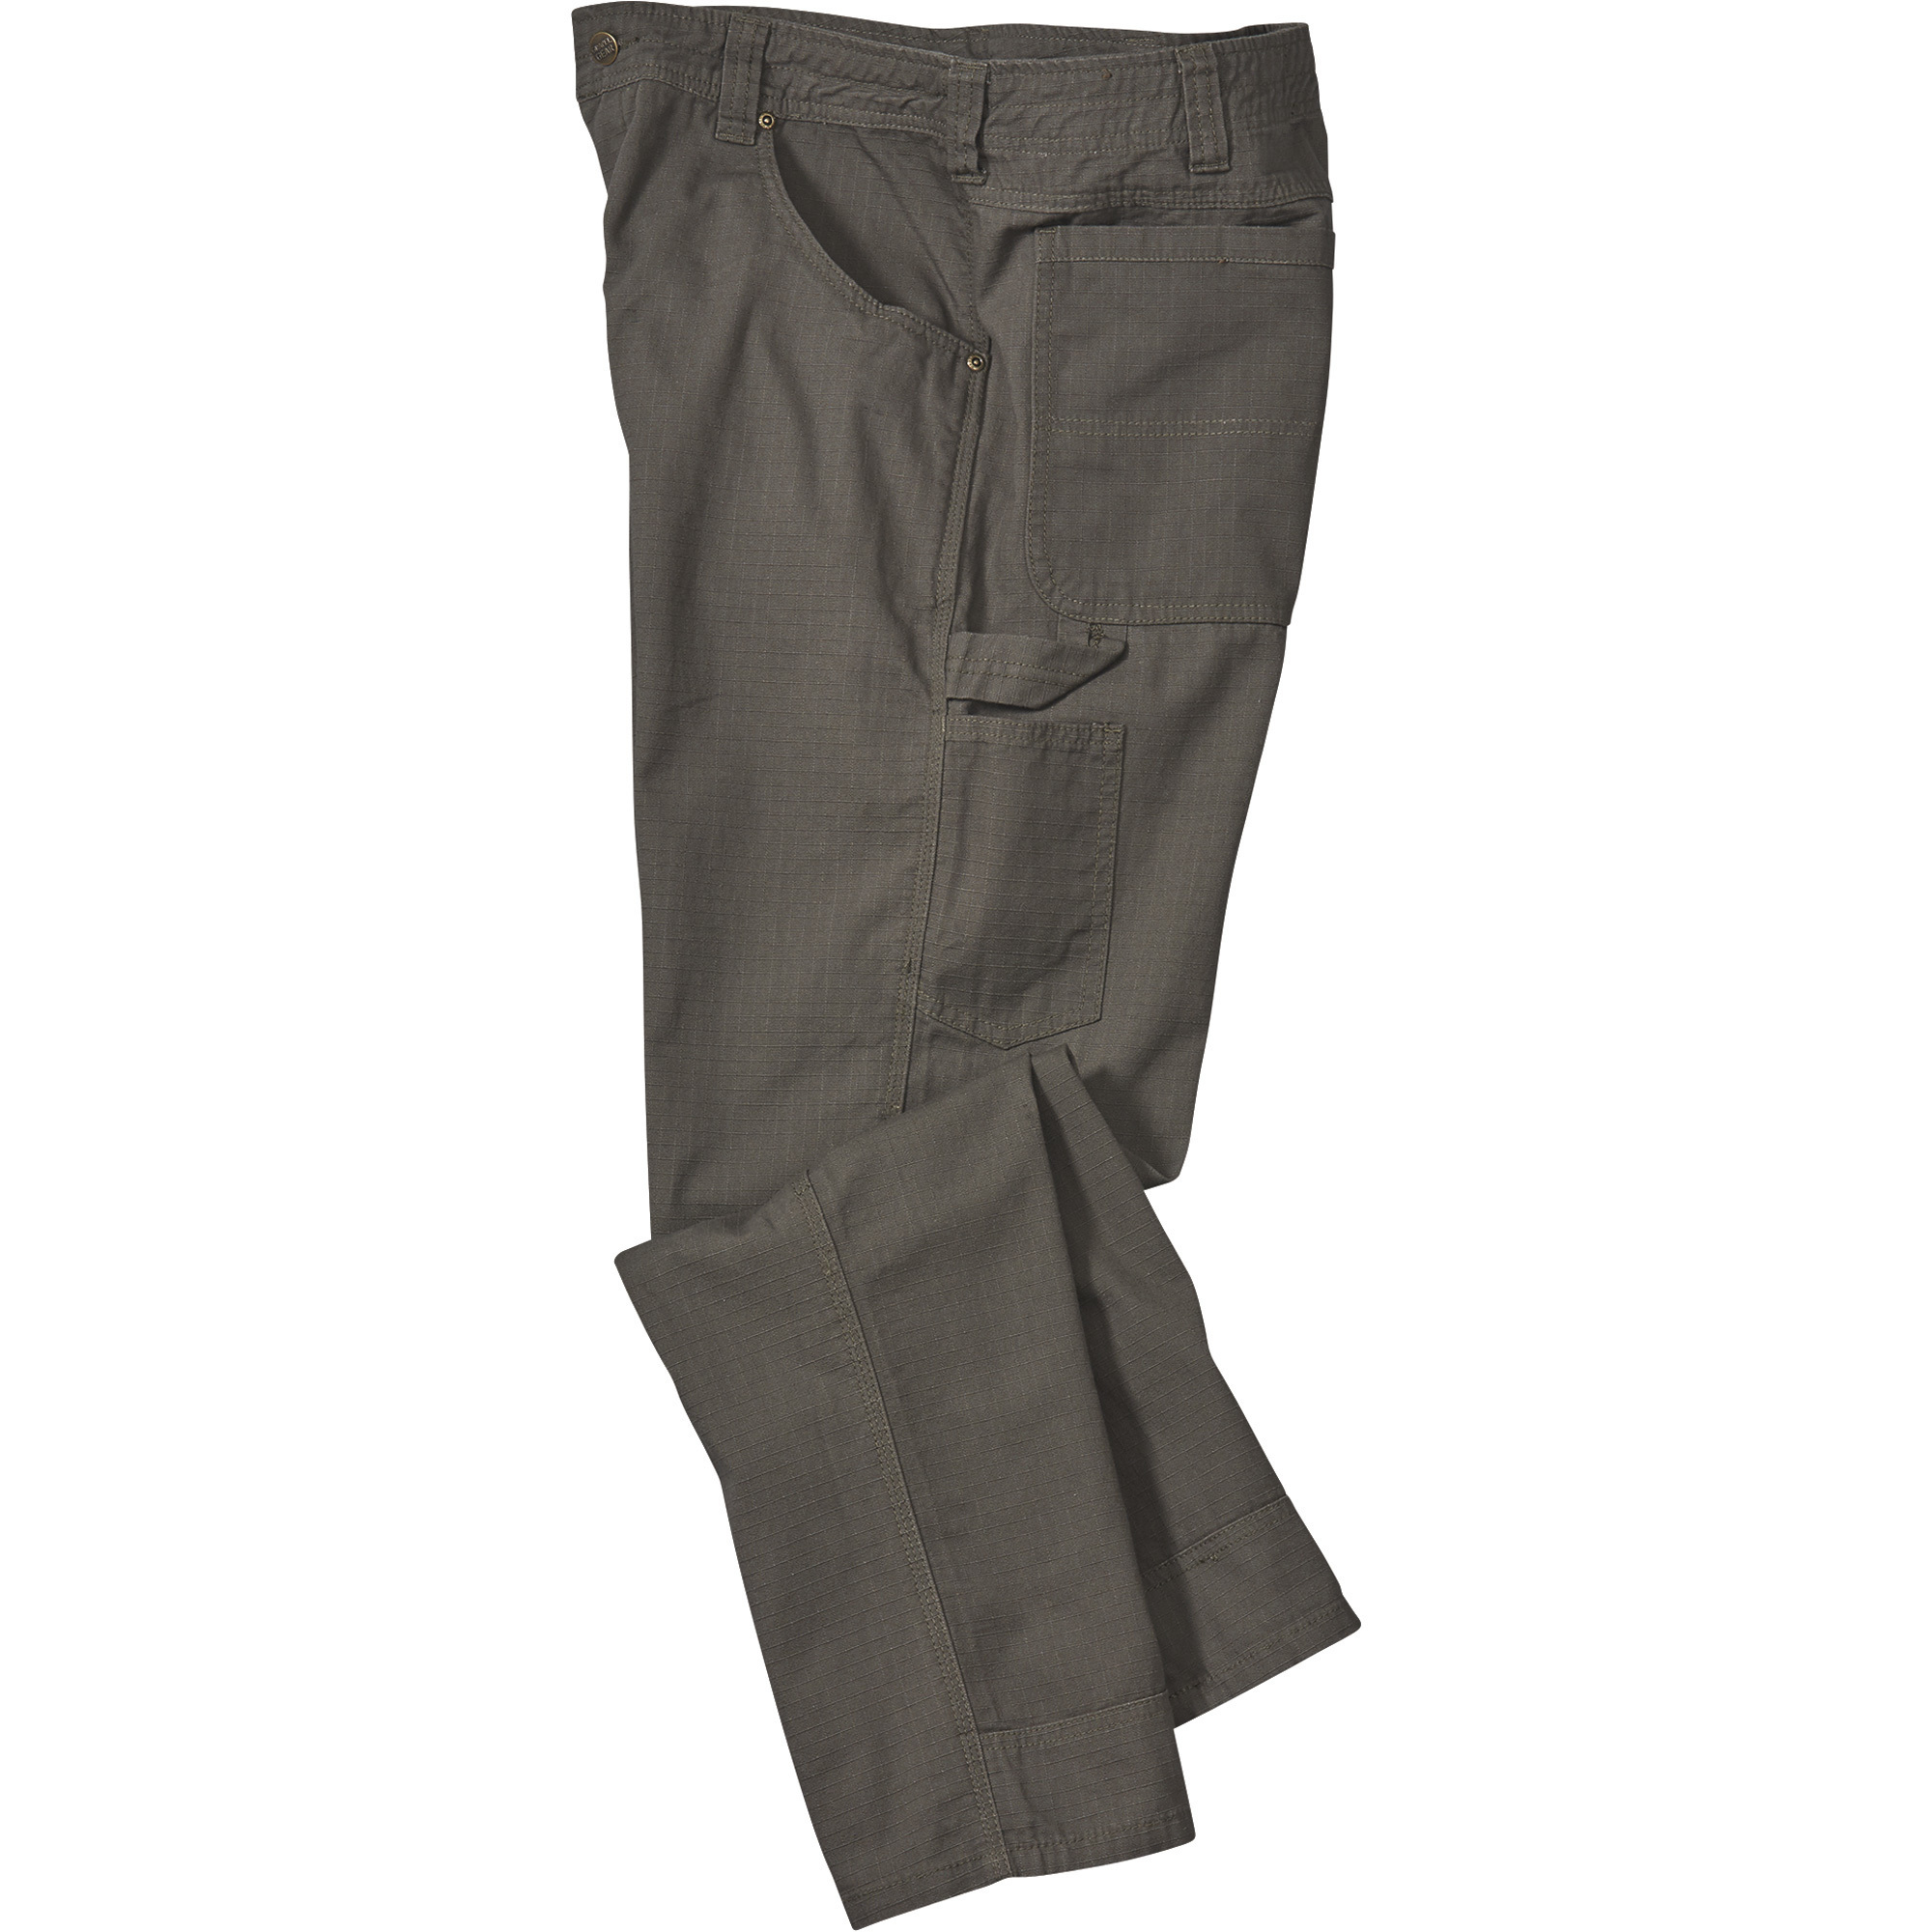 Gravel Gear Men's Cotton Ripstop Carpenter Pants with Teflon Fabric Protector â Moss, 40Inch Waist x 34Inch Inseam